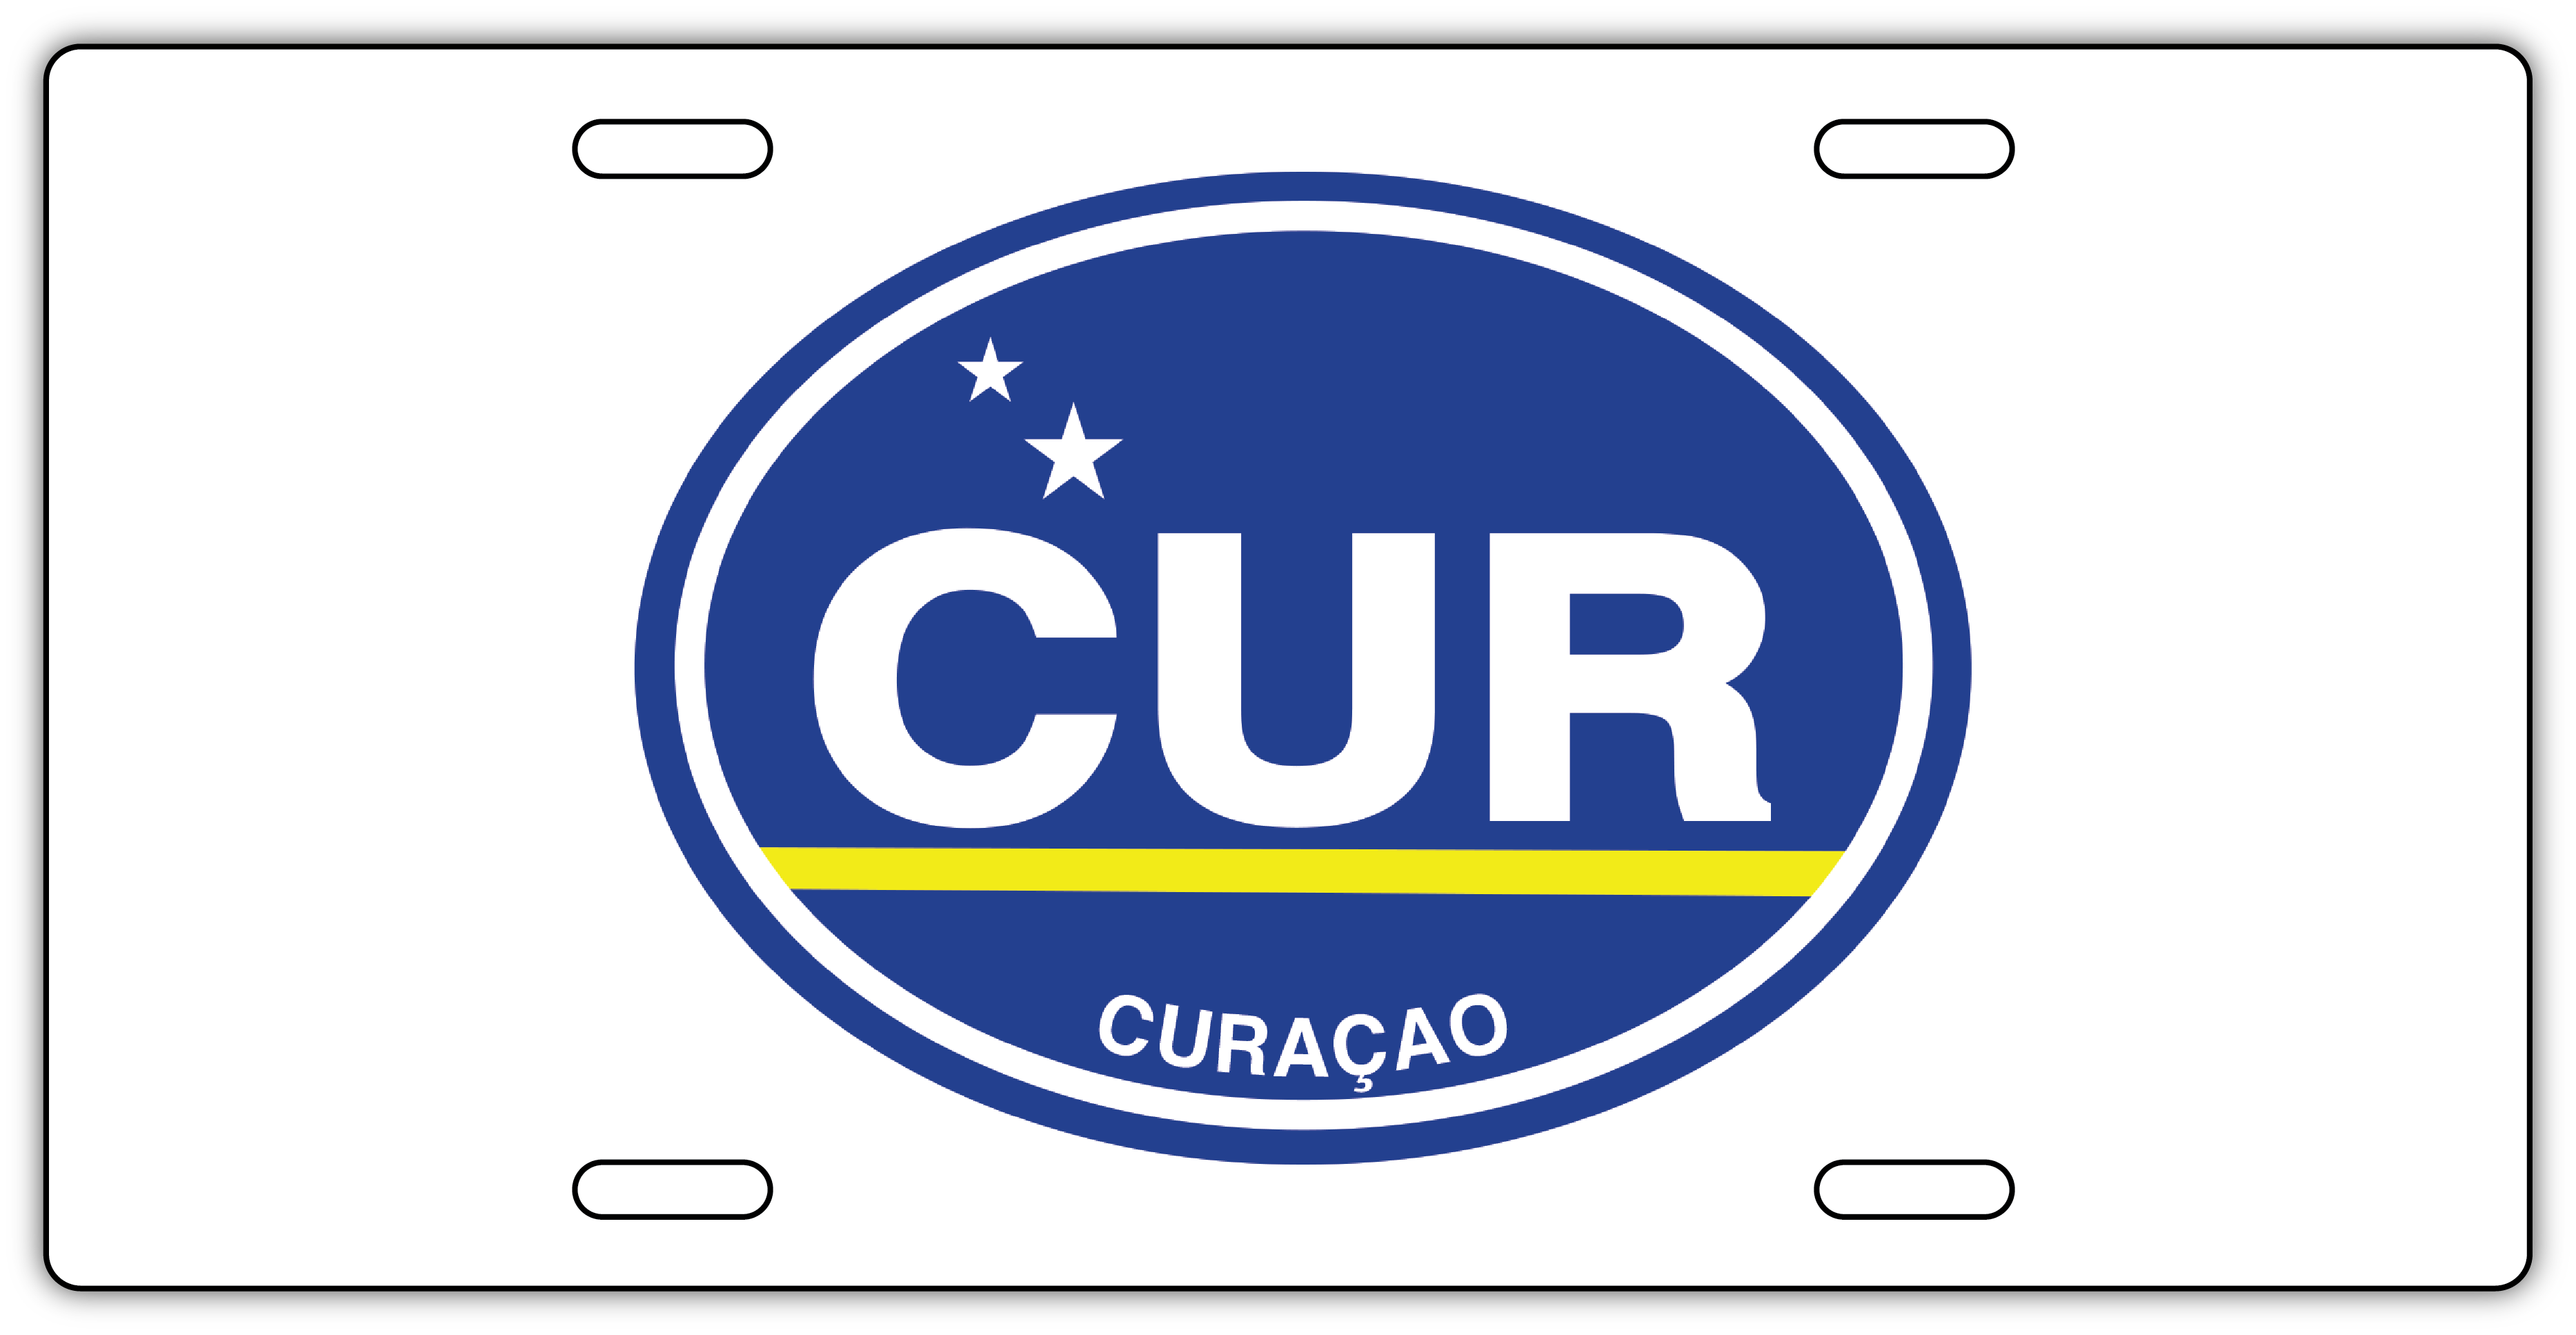 Curacao License Plates - My Destination Location